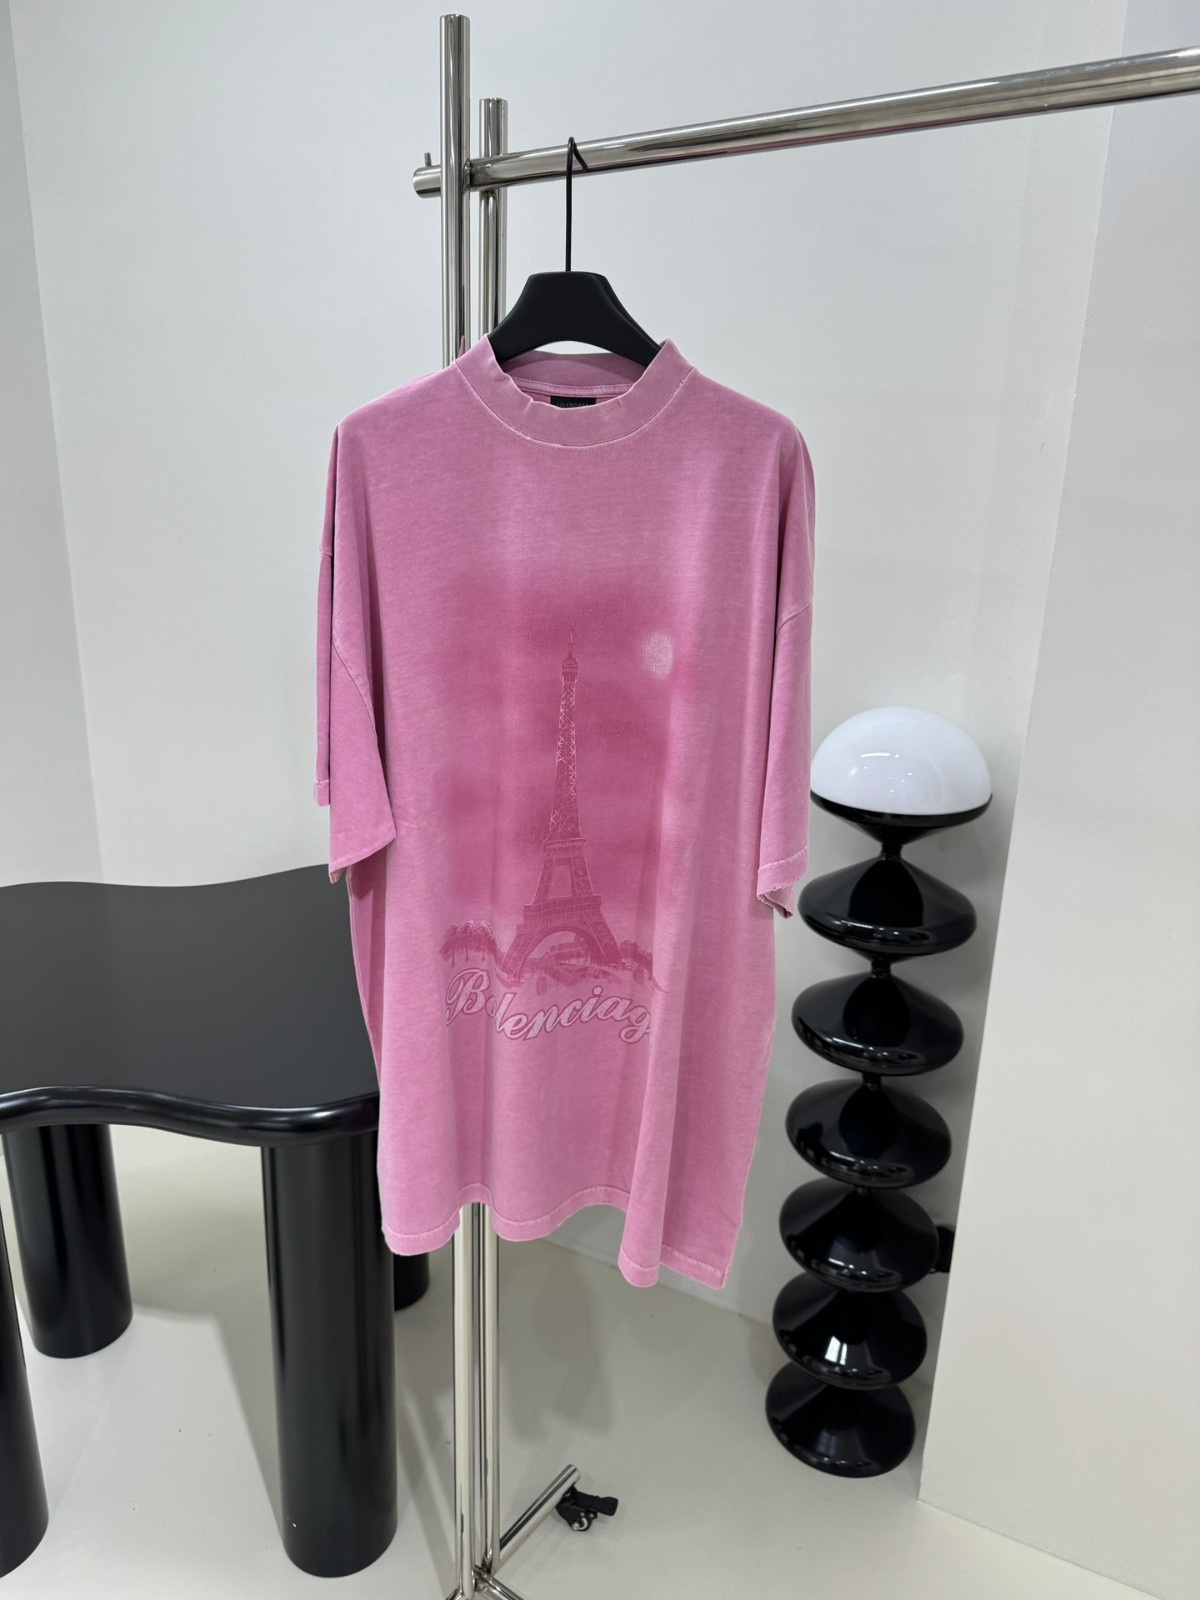 PARIS MOON 半袖Tシャツ オーバーサイズ バレンシアガ Tシャツ コピー ピンク